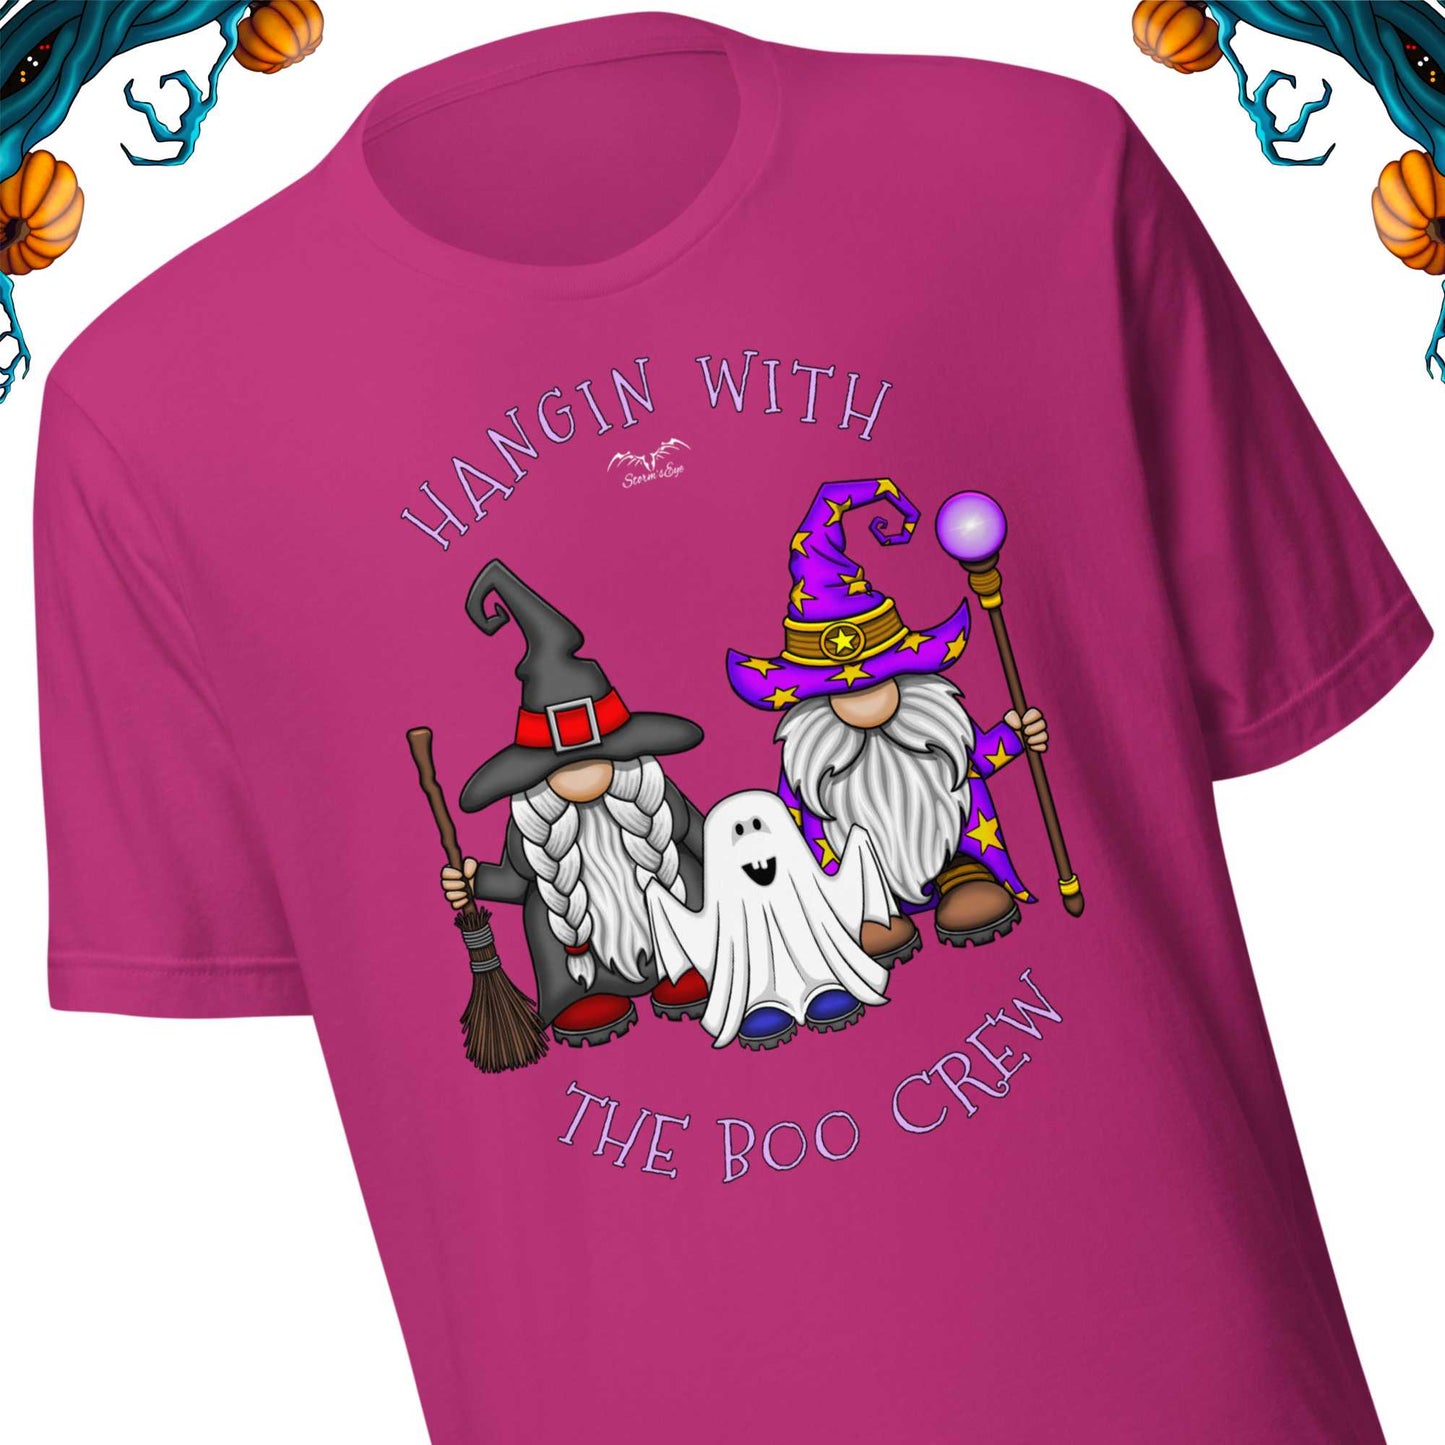 stormseye design boo crew halloween gnomes T shirt detail view pink